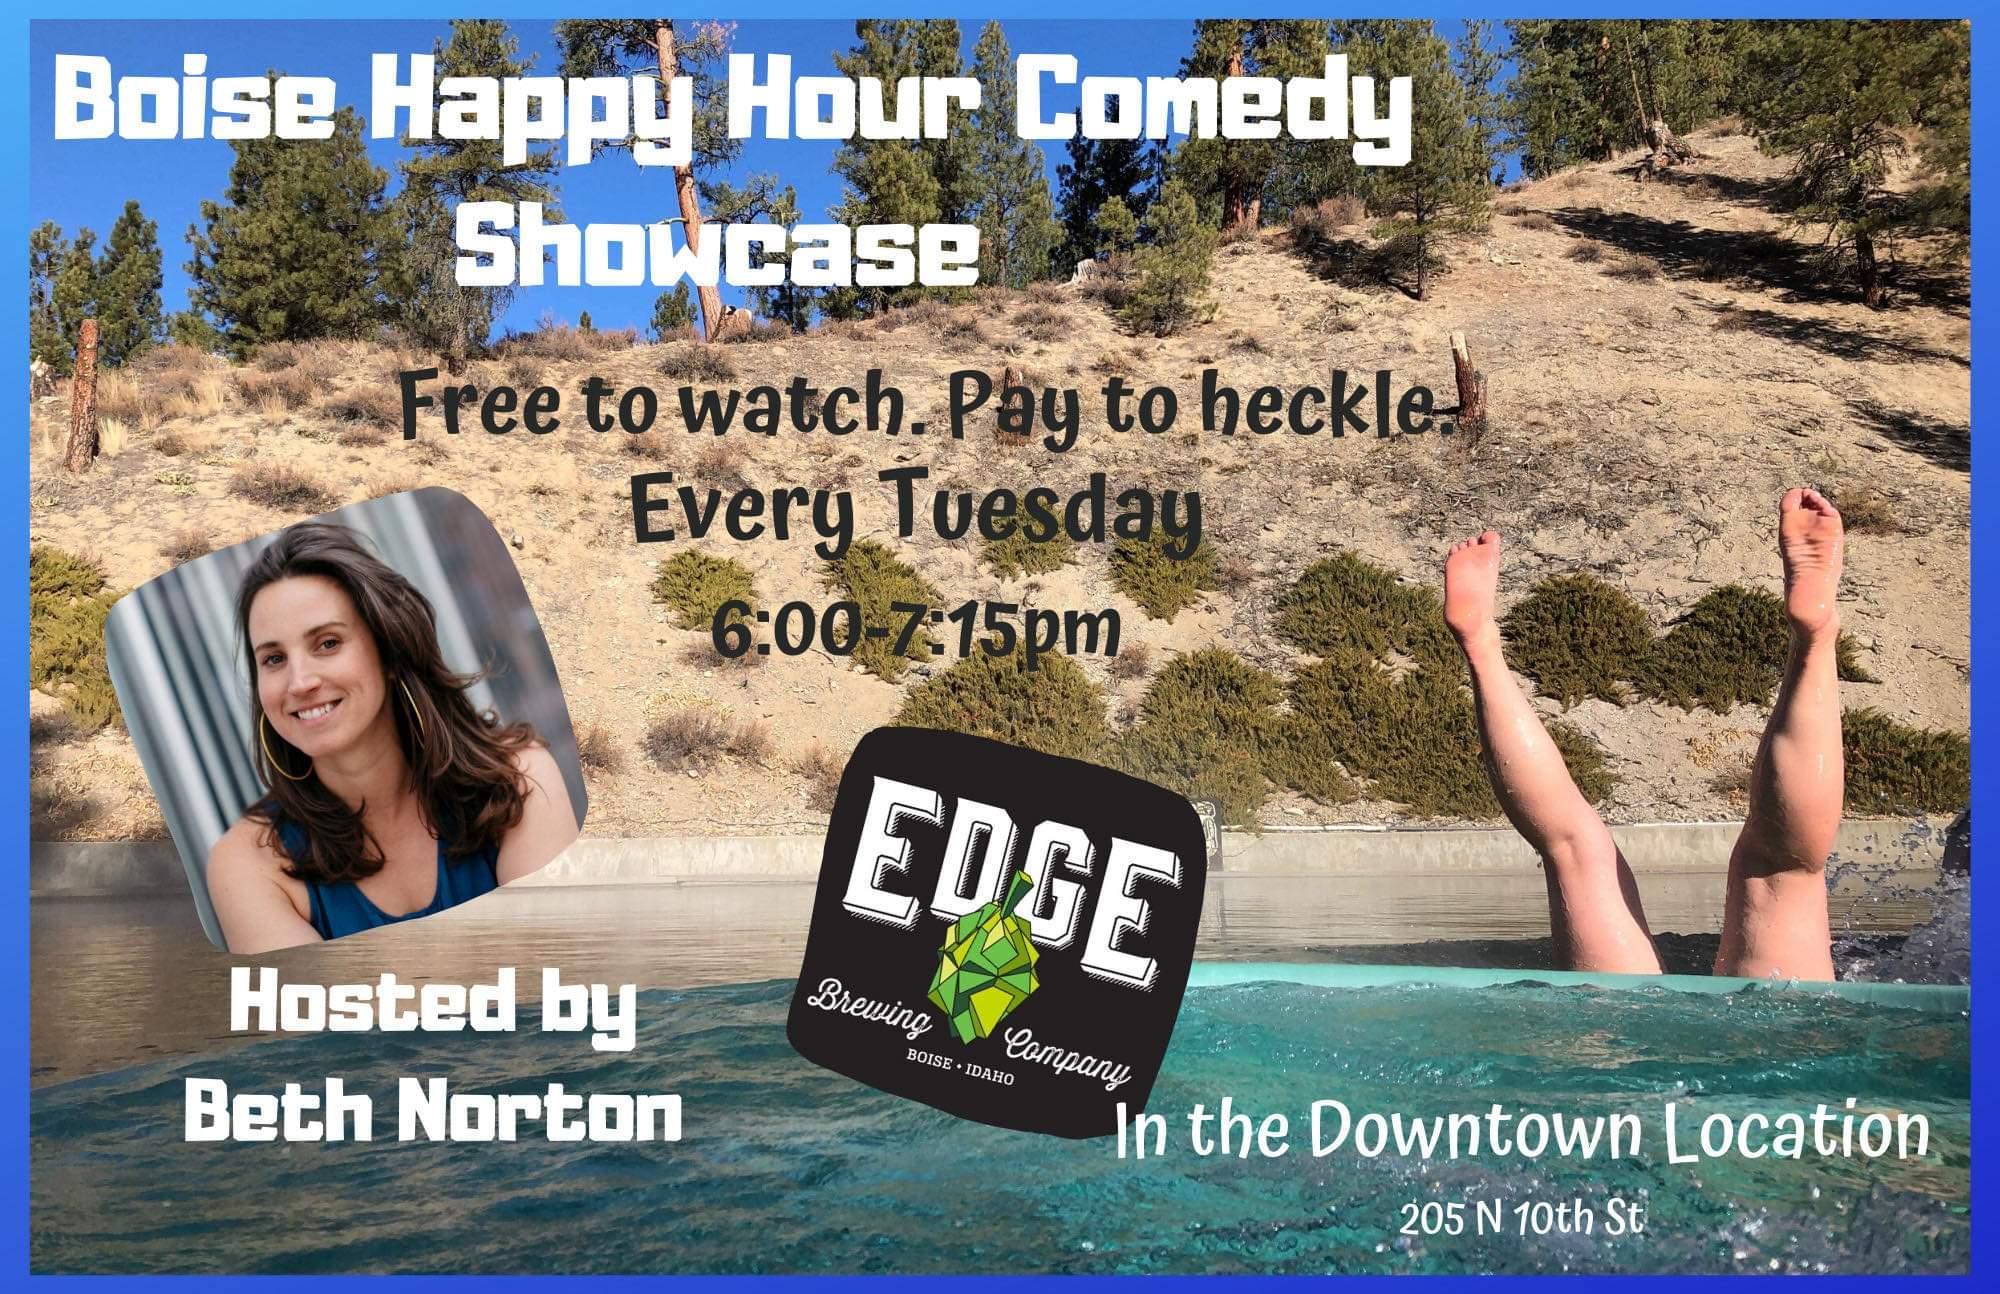 Boise Happy Hour Comedy Showcase